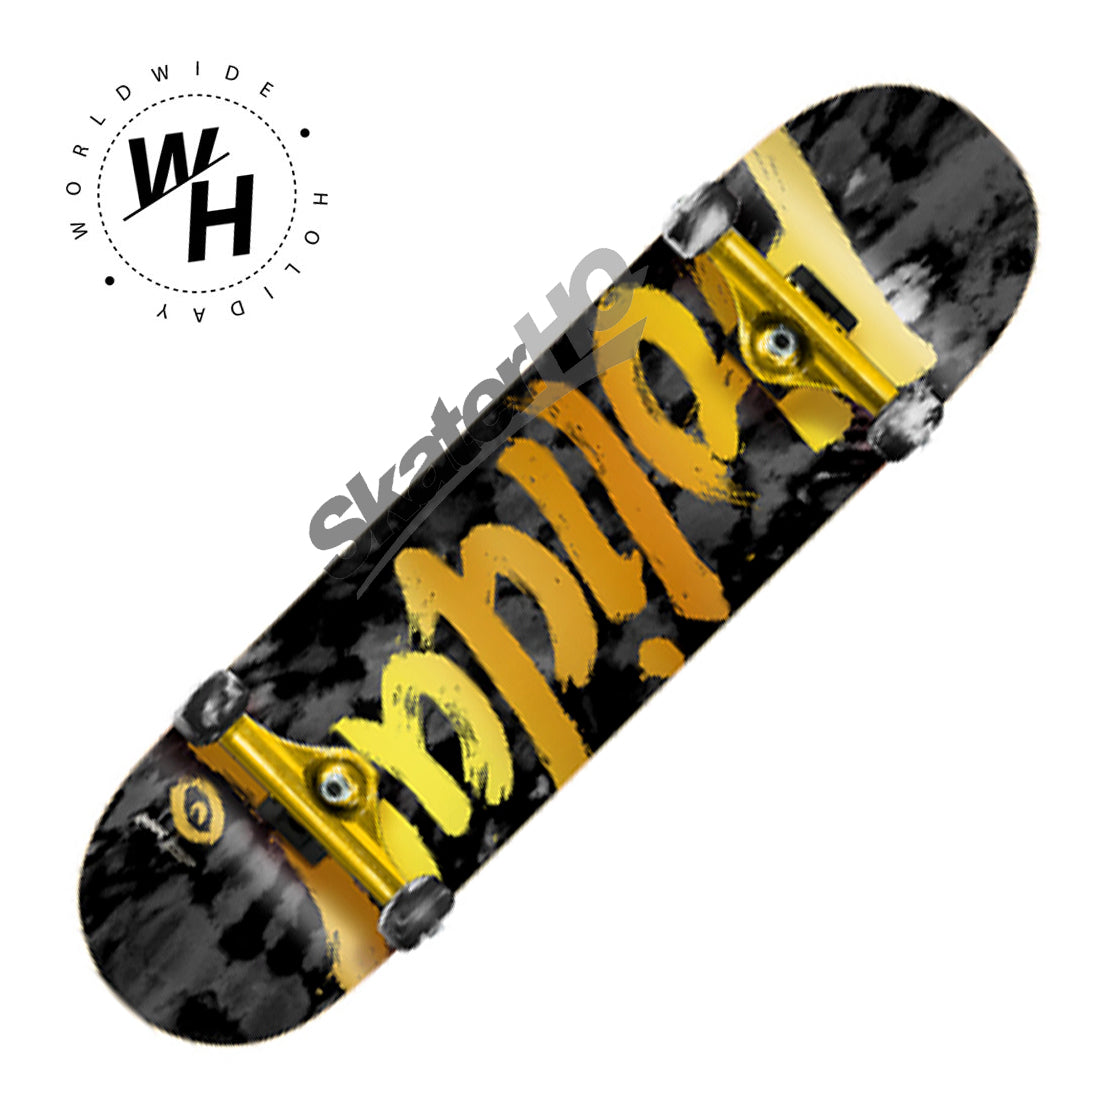 Holiday Tie Dye 7.25 Mini Complete - Black/Gold Skateboard Completes Modern Street